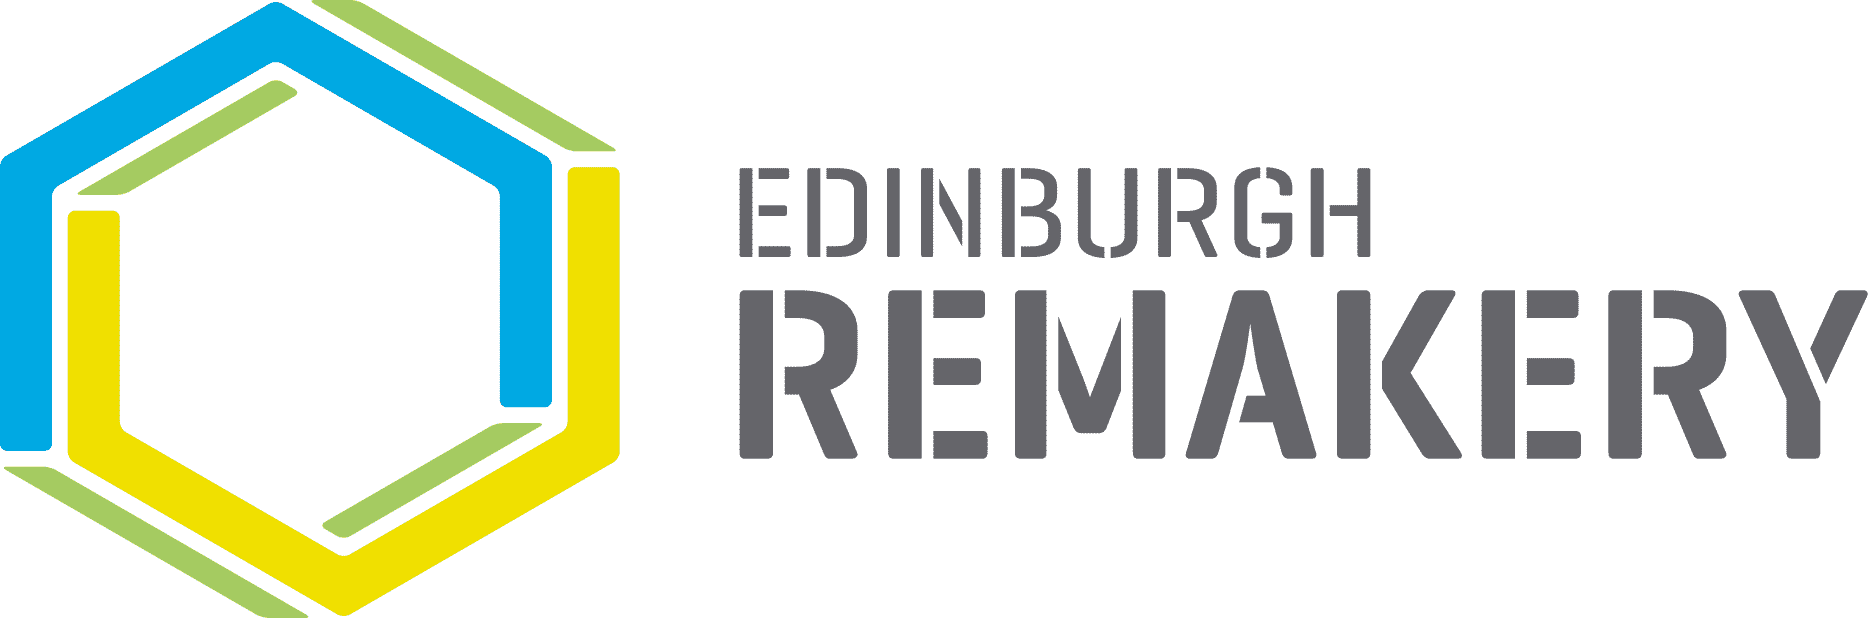 Edinburgh Remakery Logo